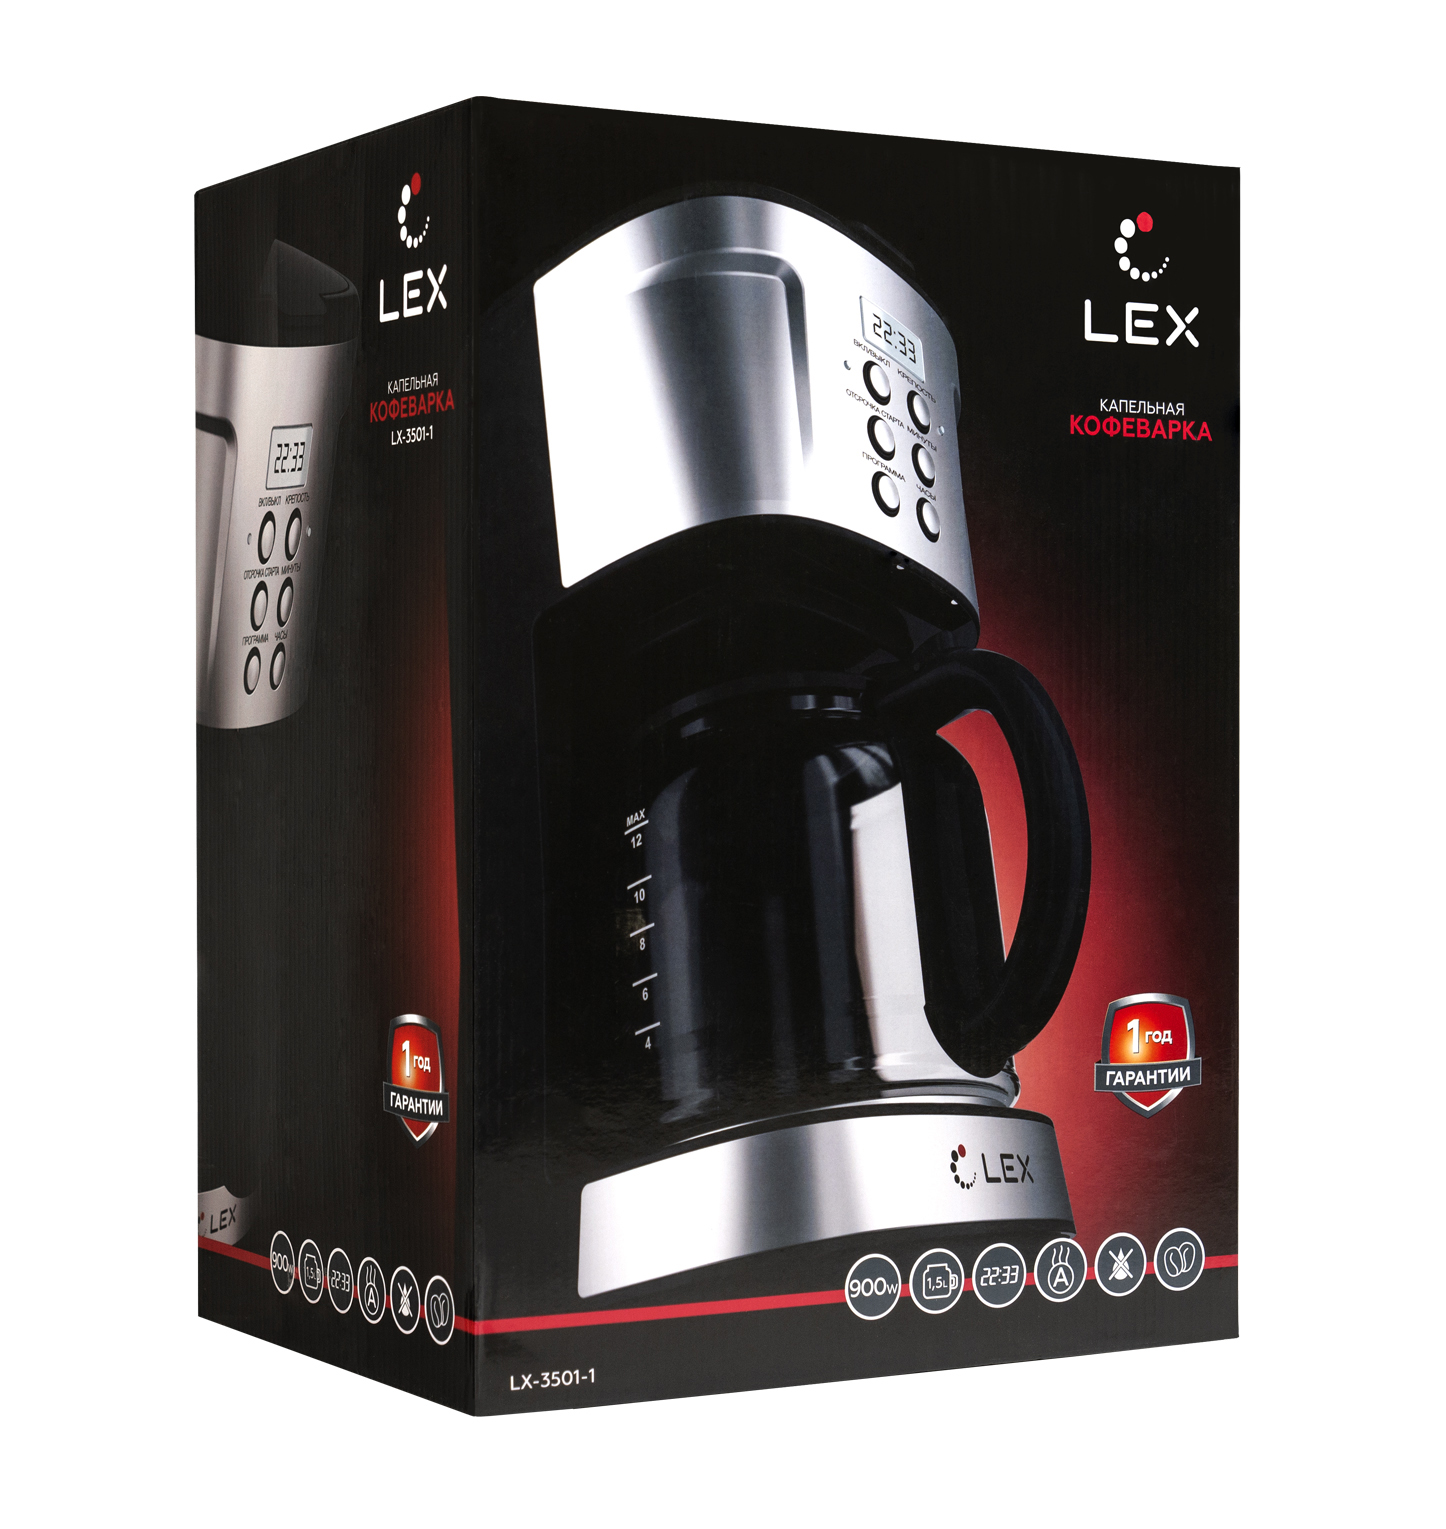 LEX LX-3501-1